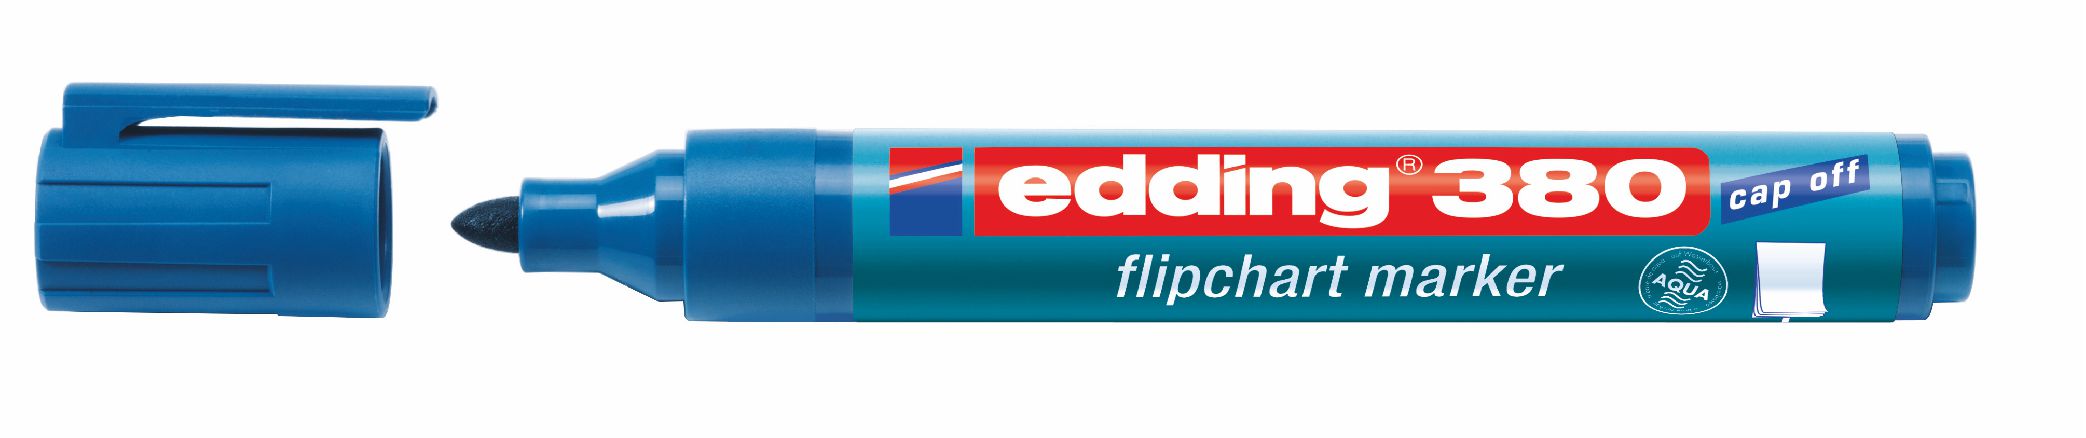 edding-380-garantiofis